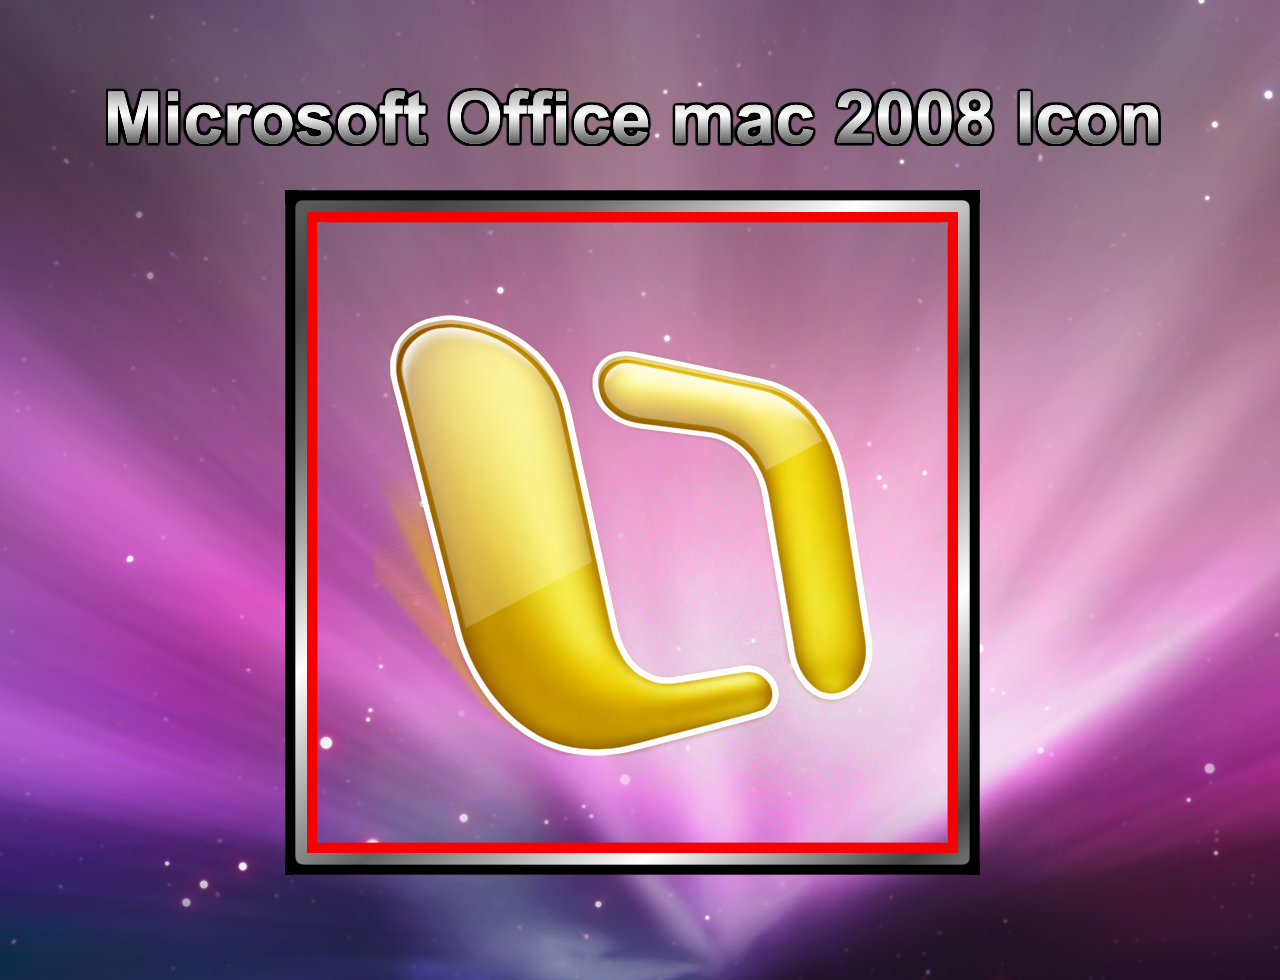 Microsoft Office Mac 2008 Icon by stumpy666davies on DeviantArt